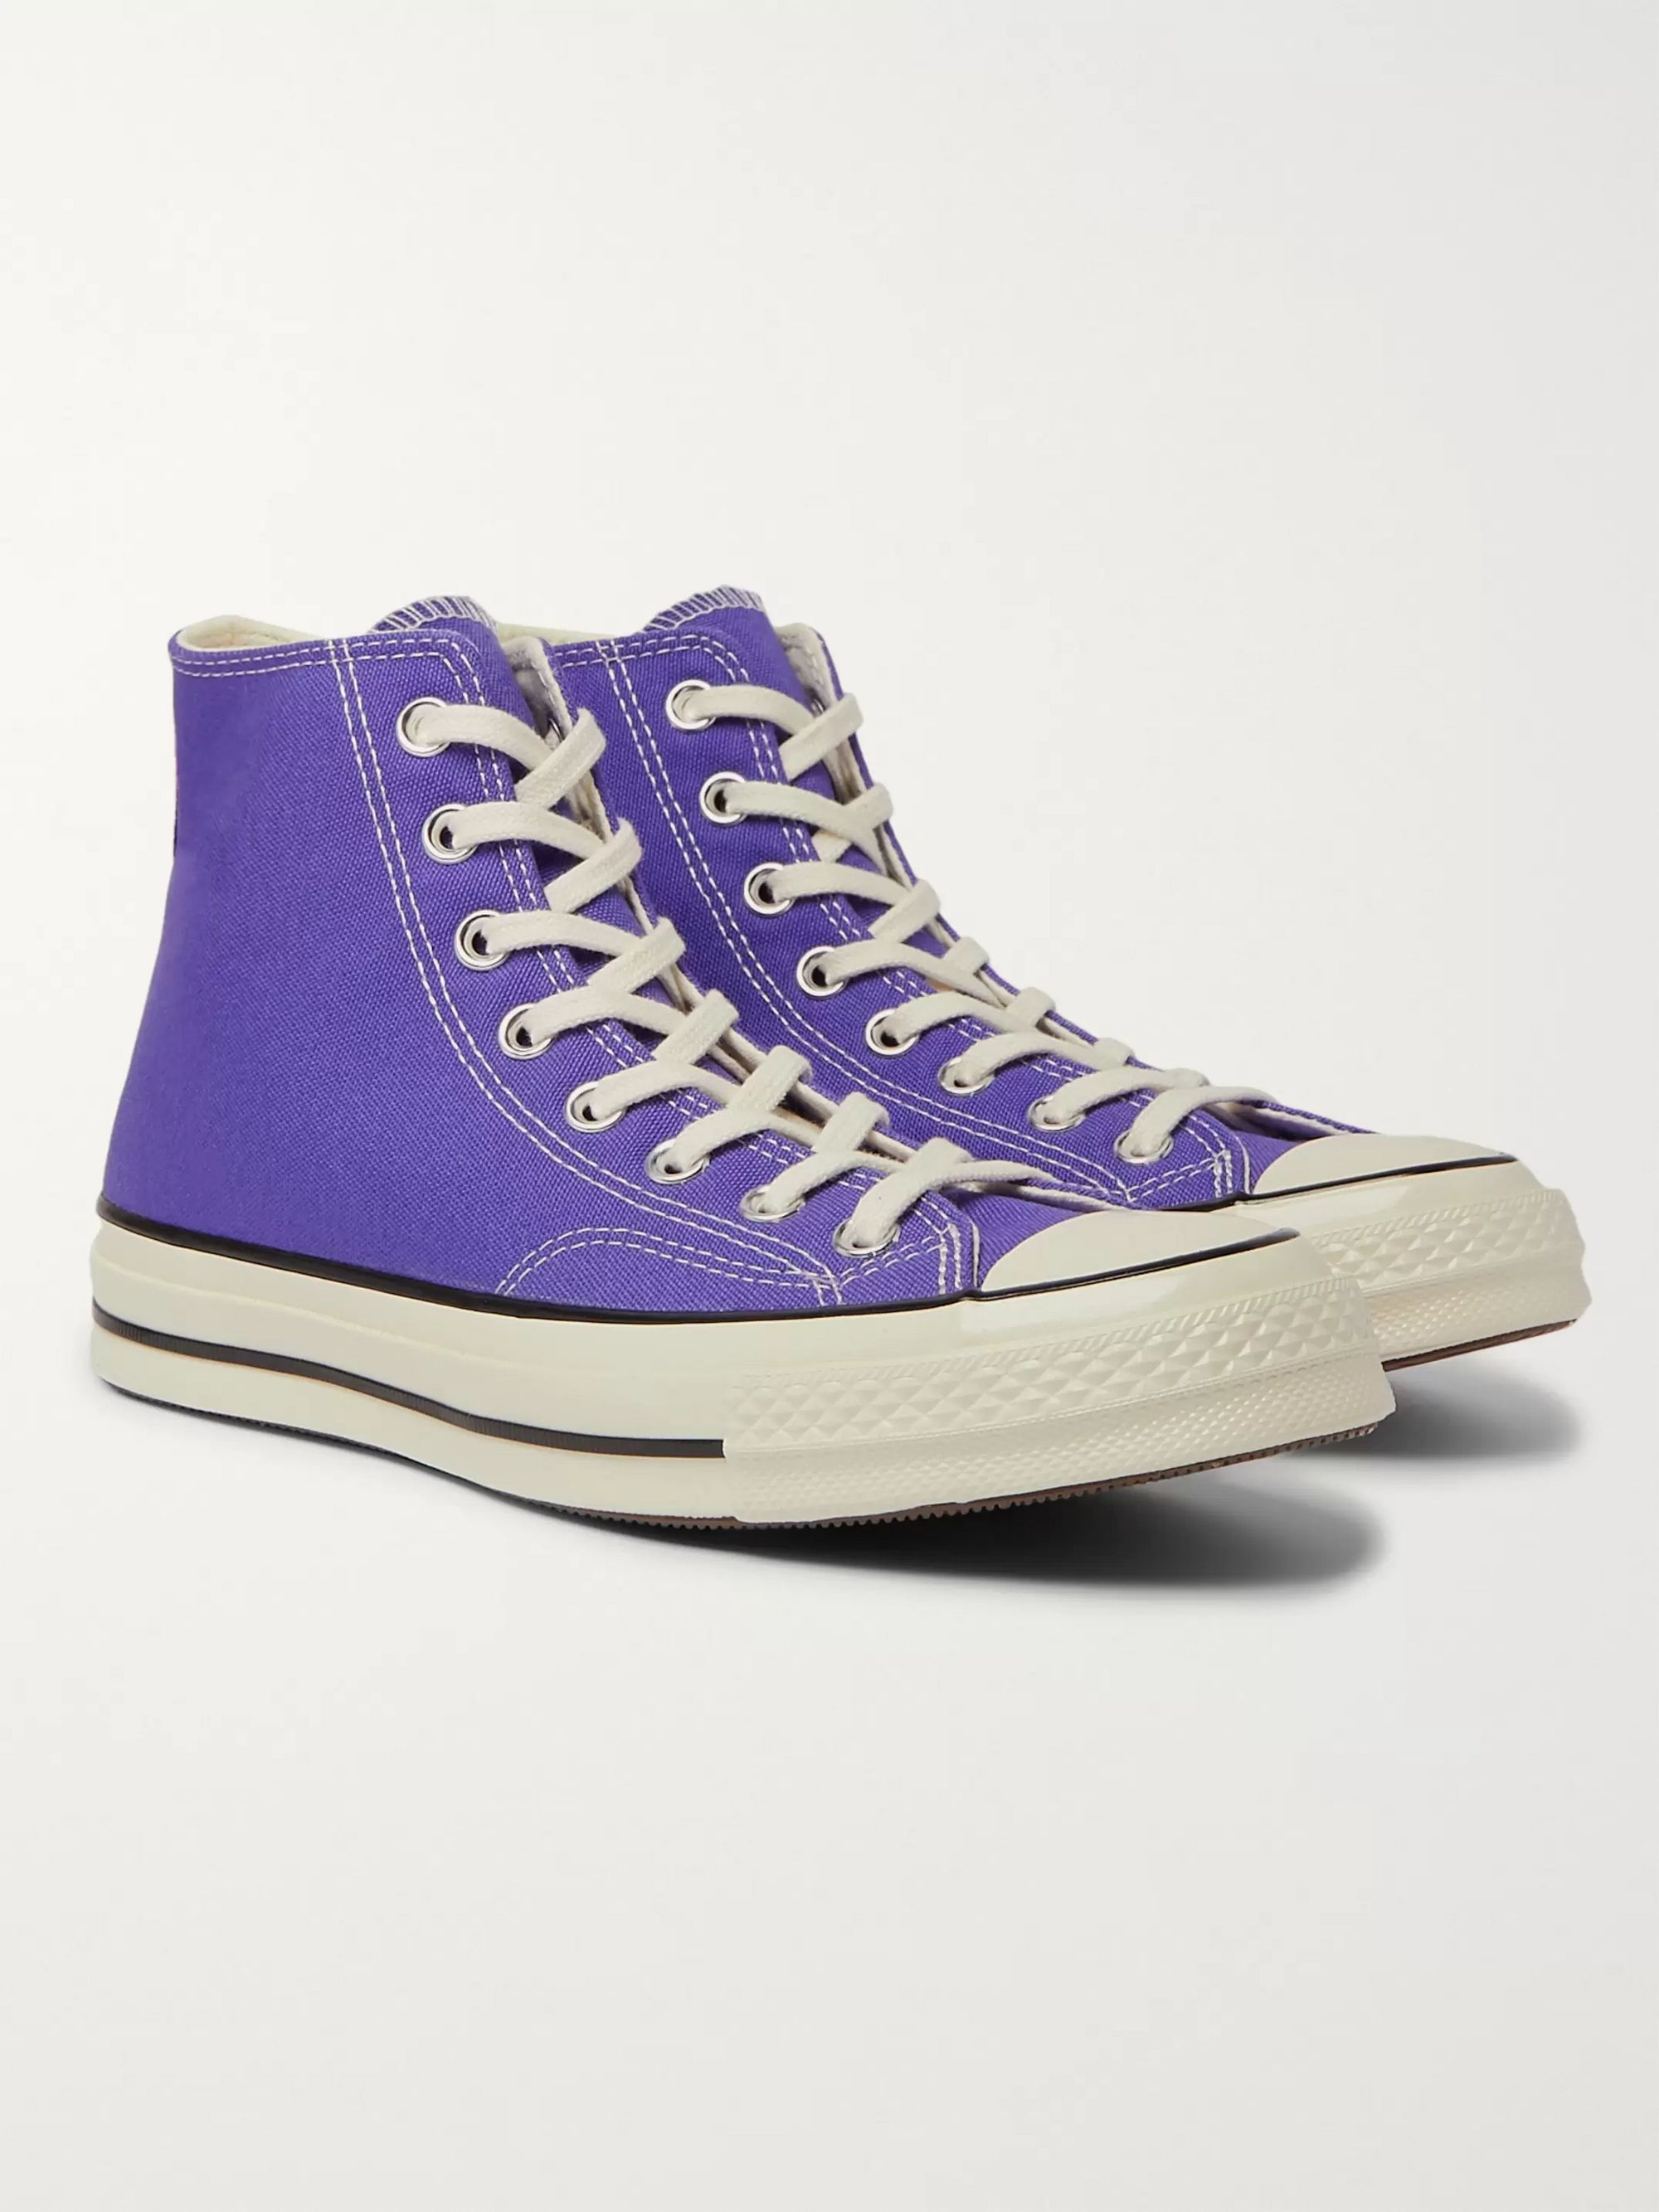 converse in purple